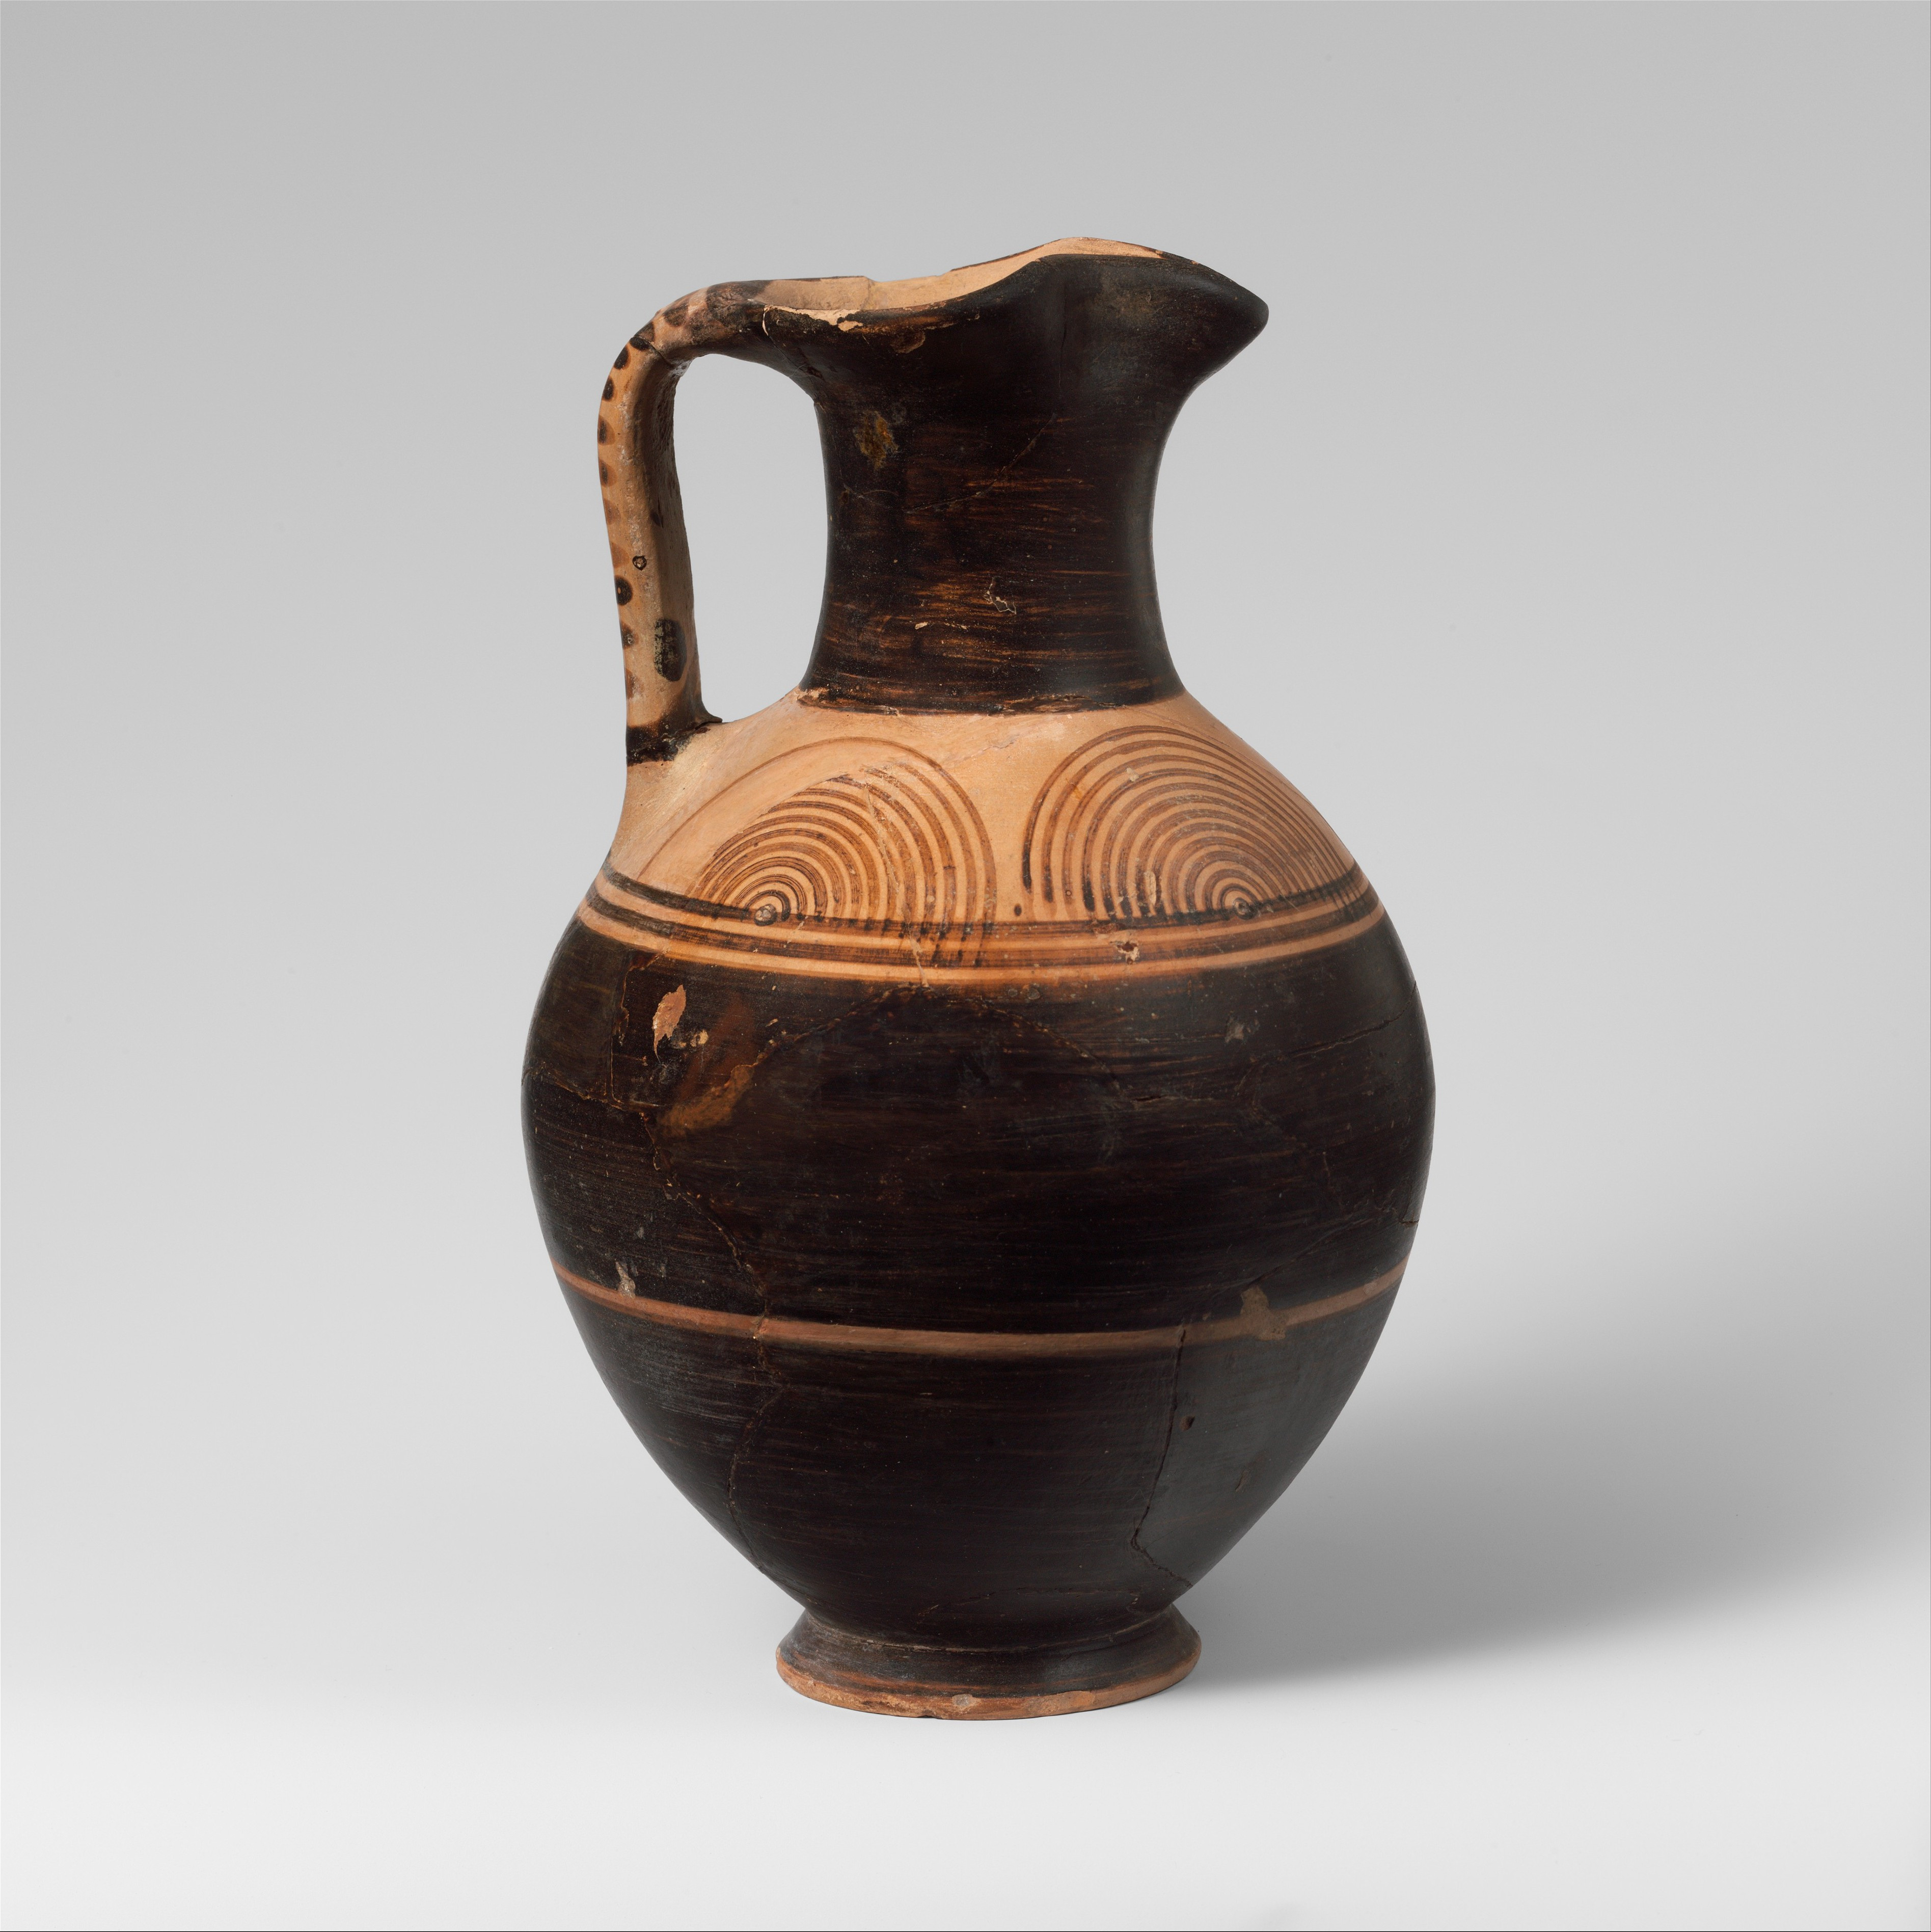 terracotta vase of fileterracotta oinochoe jug met dp132634 wikimedia commons intended for fileterracotta oinochoe jug met dp132634